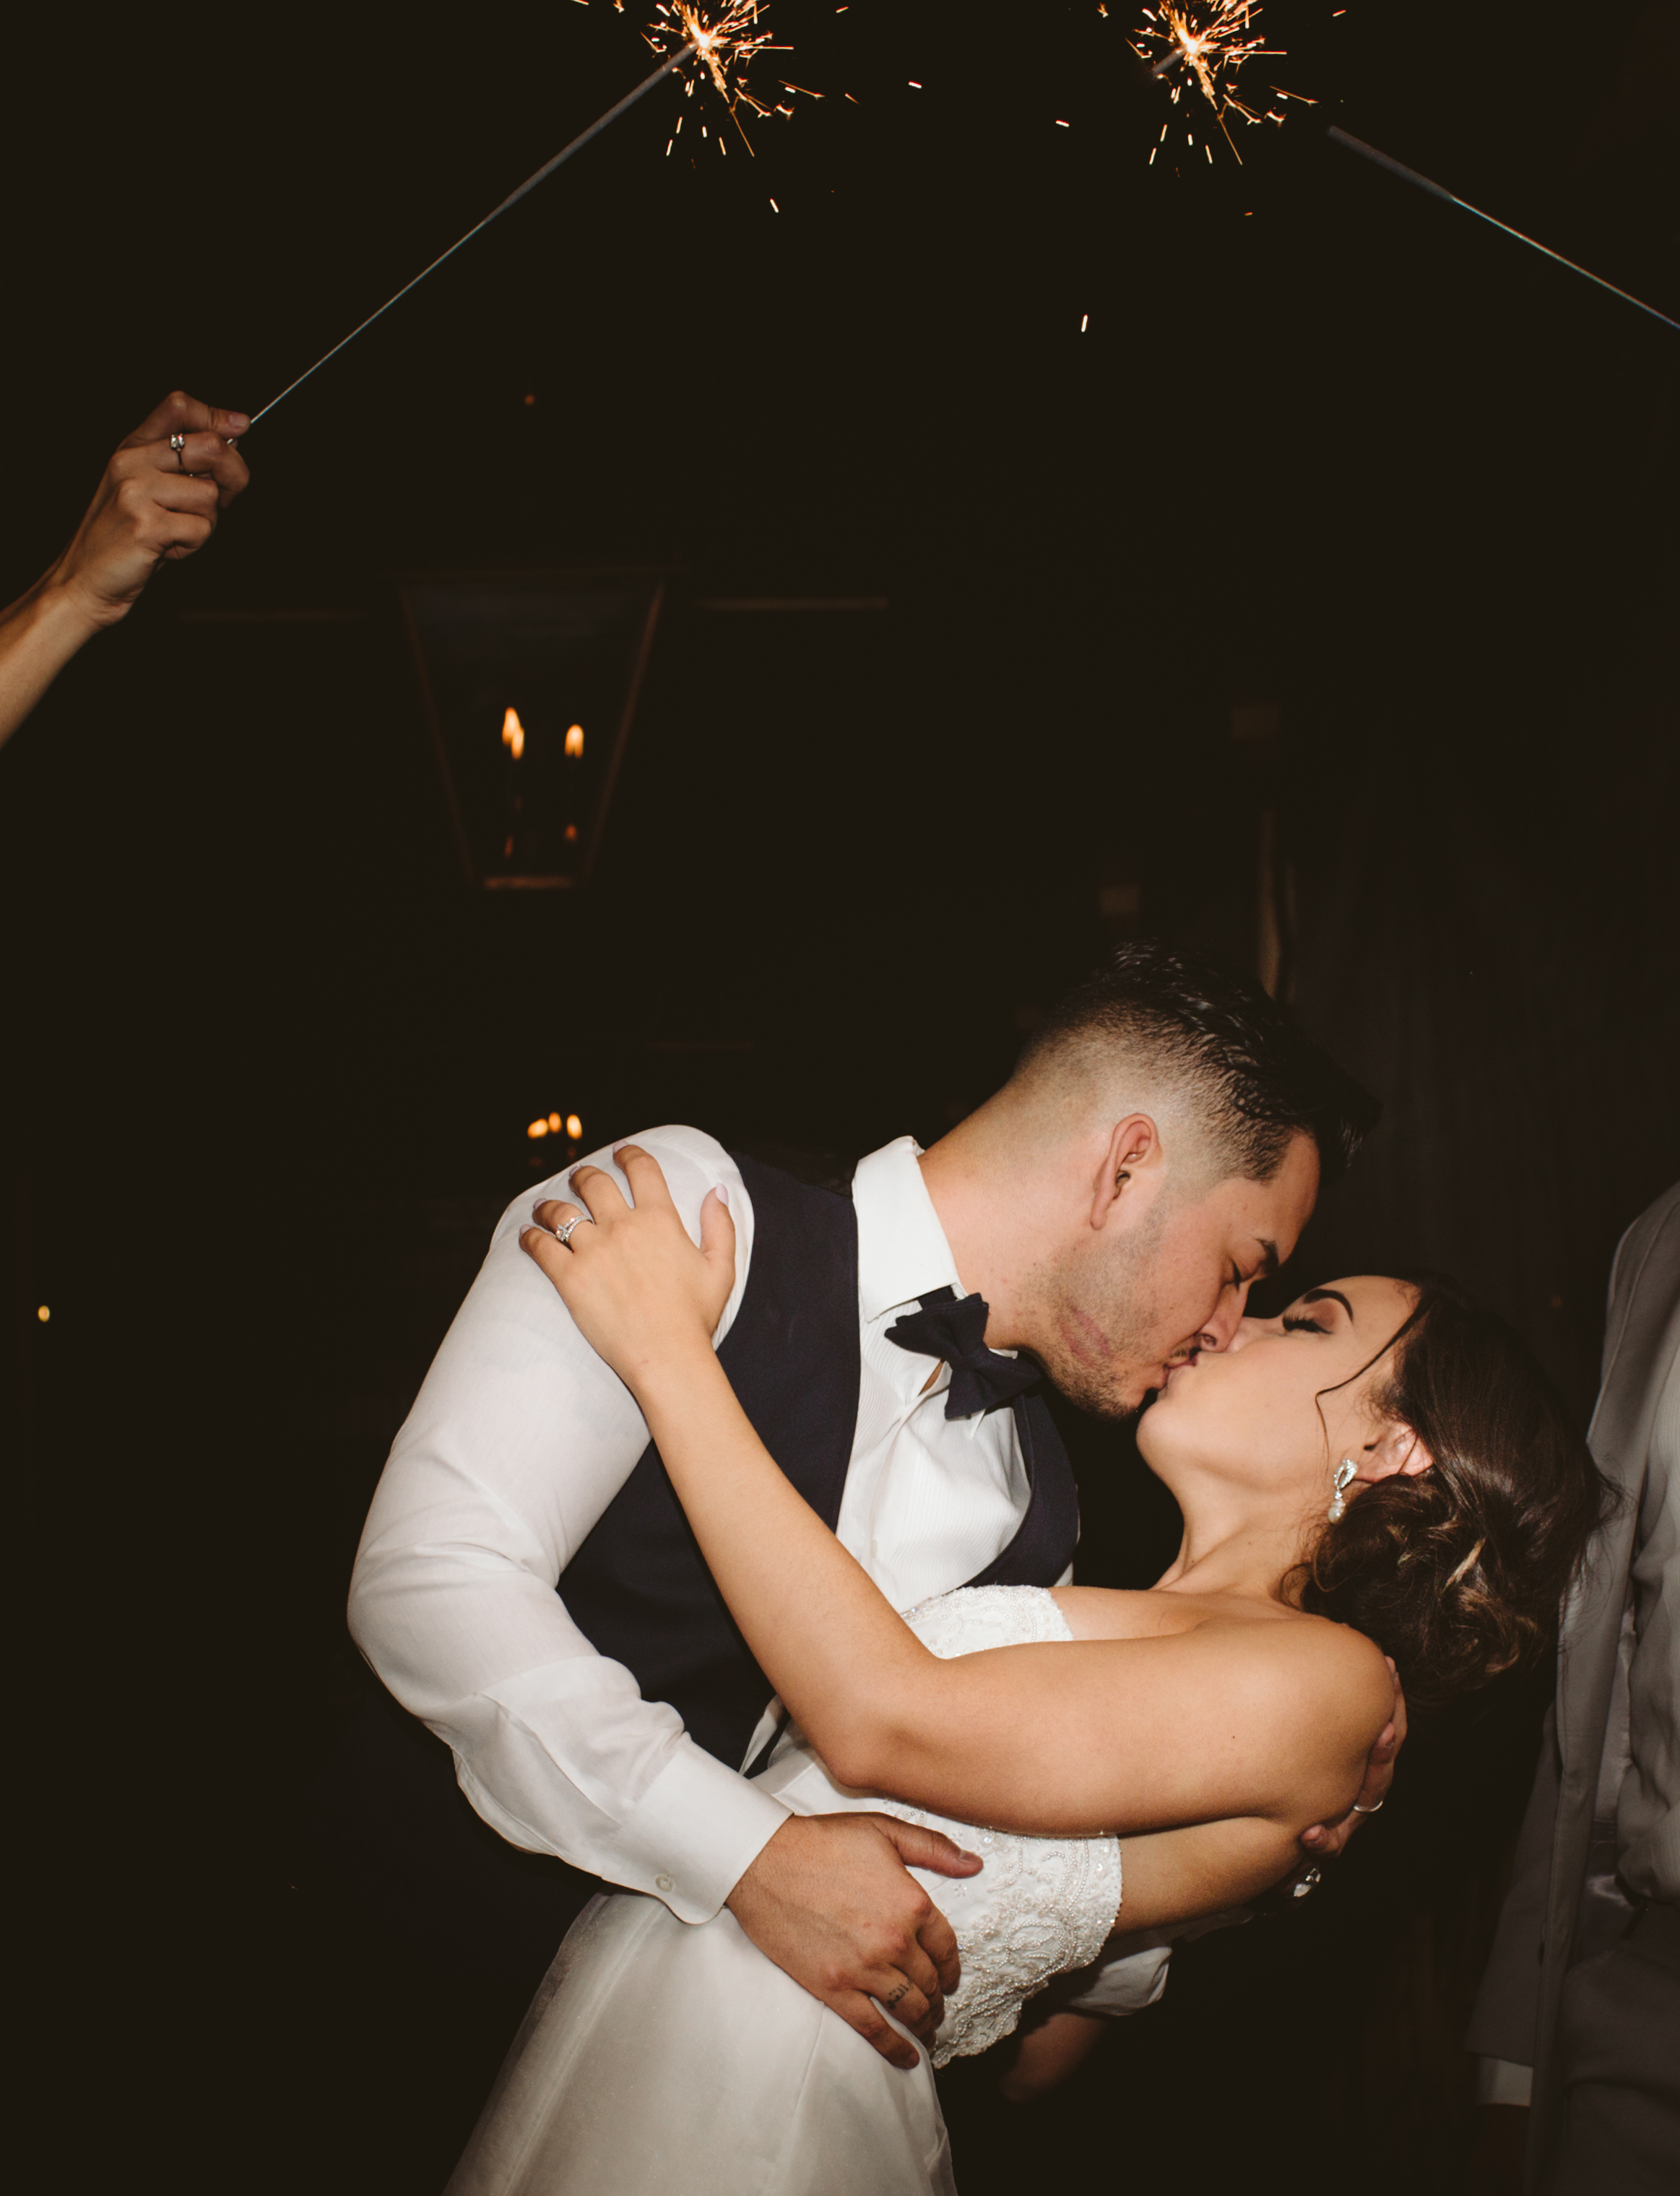 Ceviche Orlando | Wedding Photography | Vanessa Boy | vanessaboy.com |-650.com |final.jpg